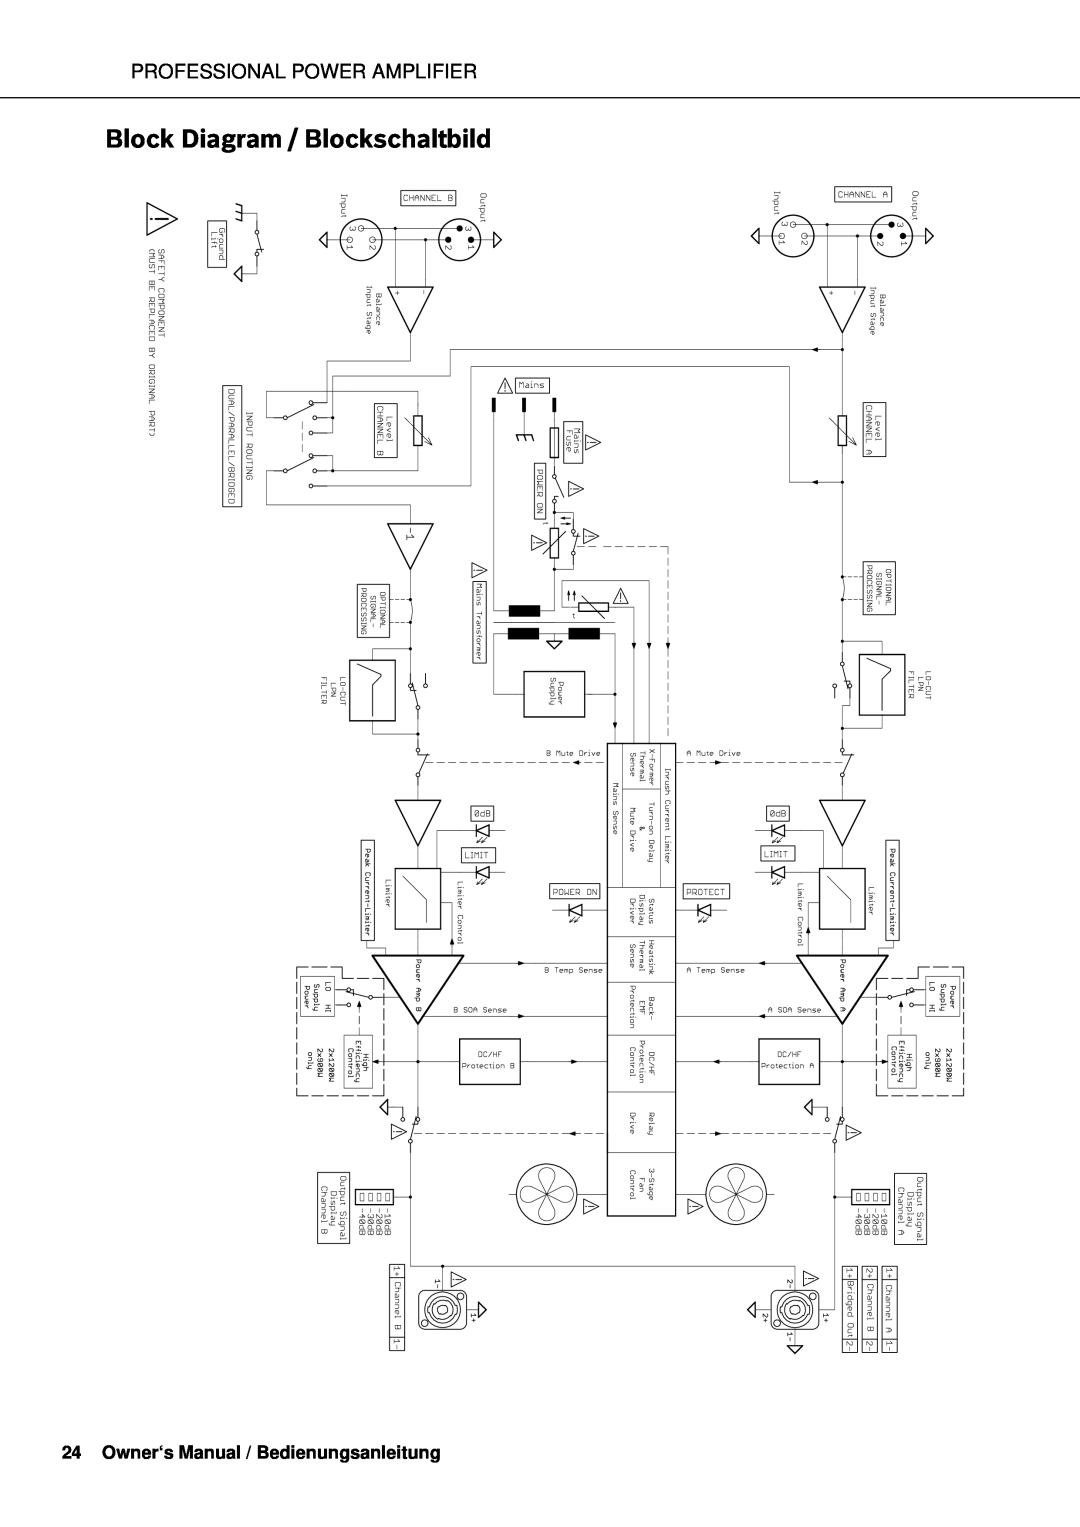 Electro-Voice Q66, Q44 Block Diagram / Blockschaltbild, Owner‘s Manual / Bedienungsanleitung, Professional Power Amplifier 